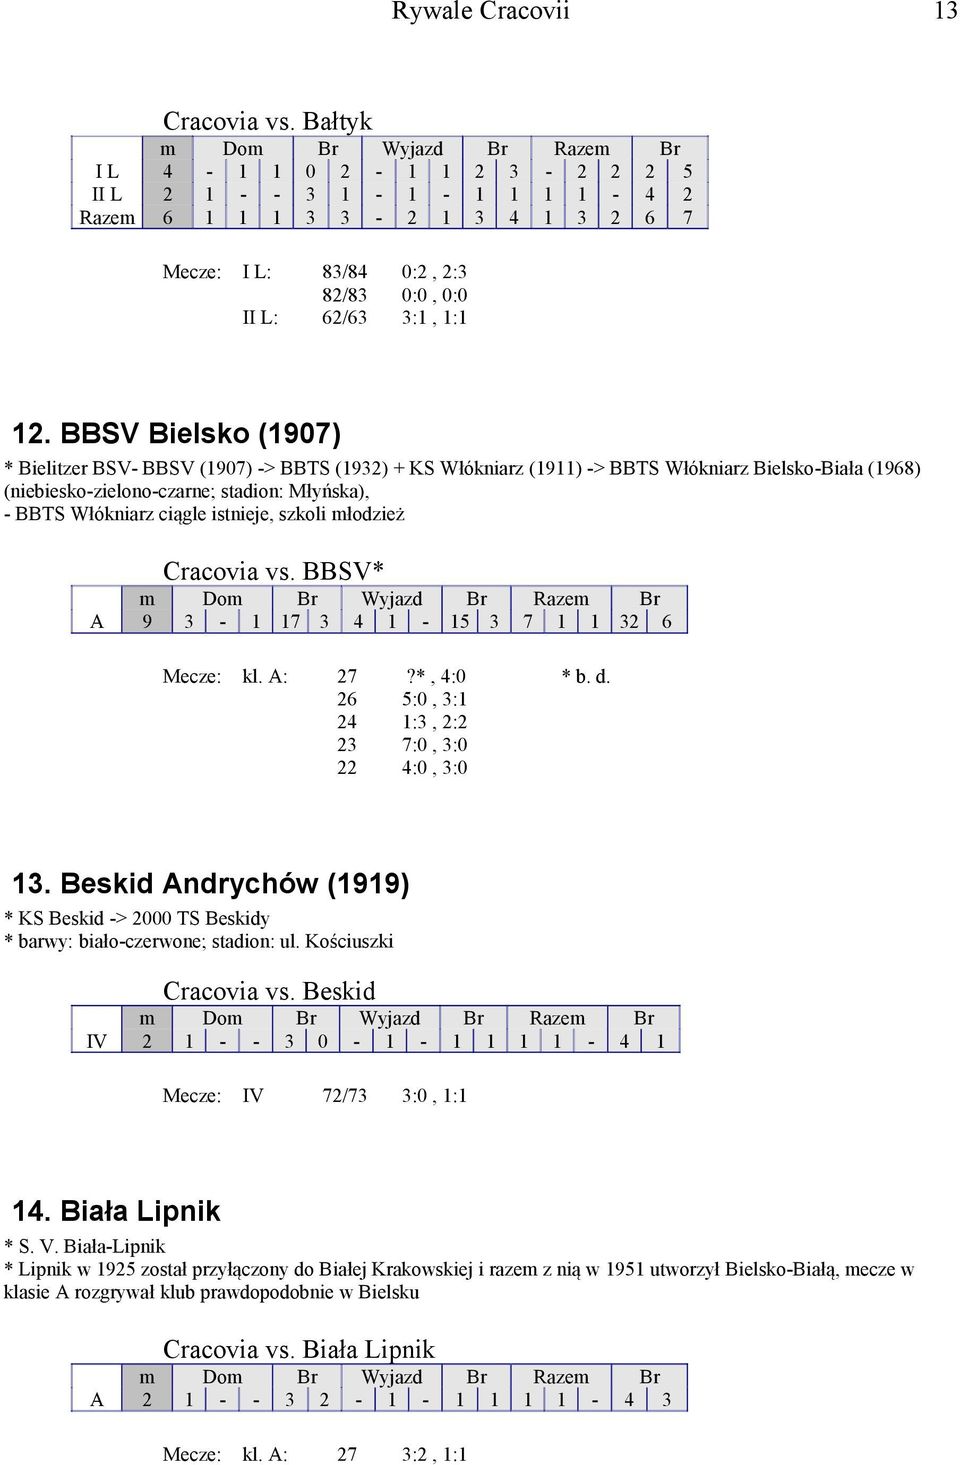 BBSV Bielsko (1907) * Bielitzer BSV- BBSV (1907) -> BBTS (1932) + KS Włókniarz (1911) -> BBTS Włókniarz Bielsko-Biała (1968) (niebiesko-zielono-czarne; stadion: Młyńska), - BBTS Włókniarz ciągle